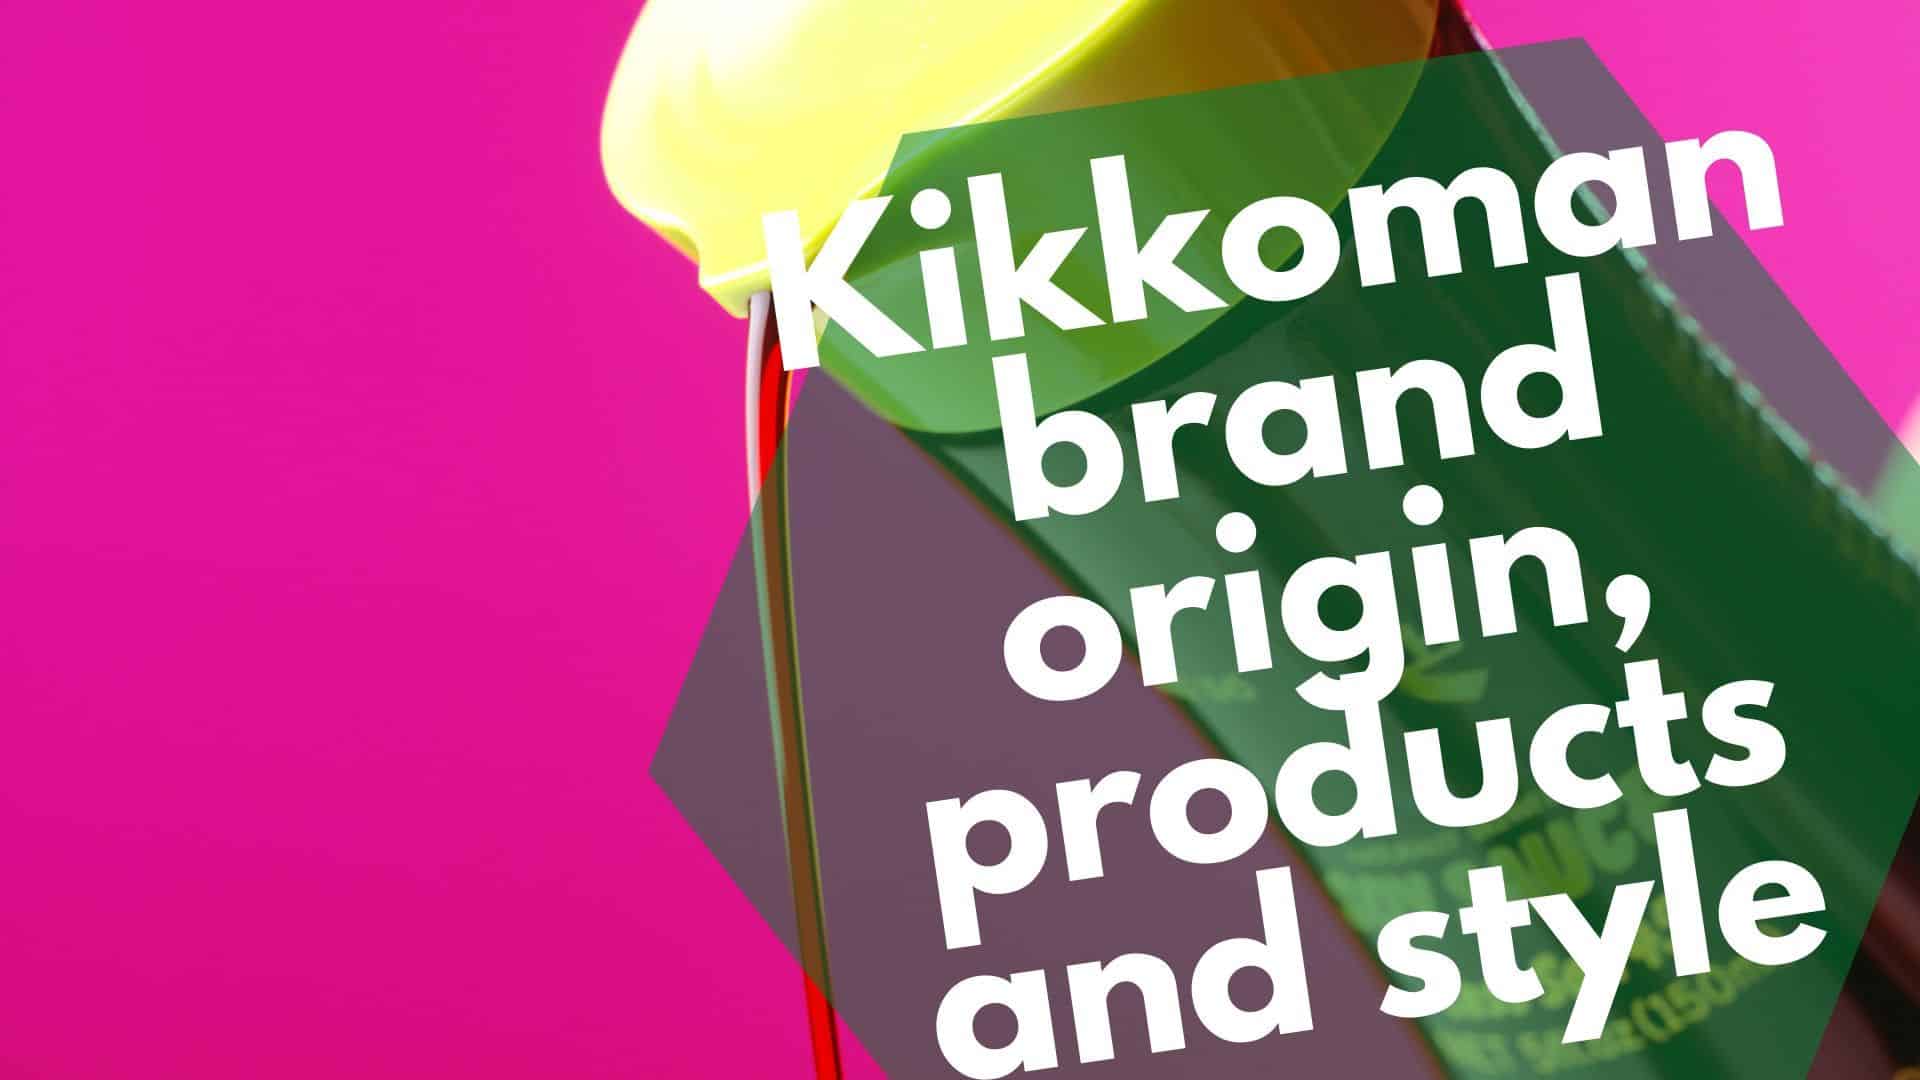 Kikkoman brand origin, products and style